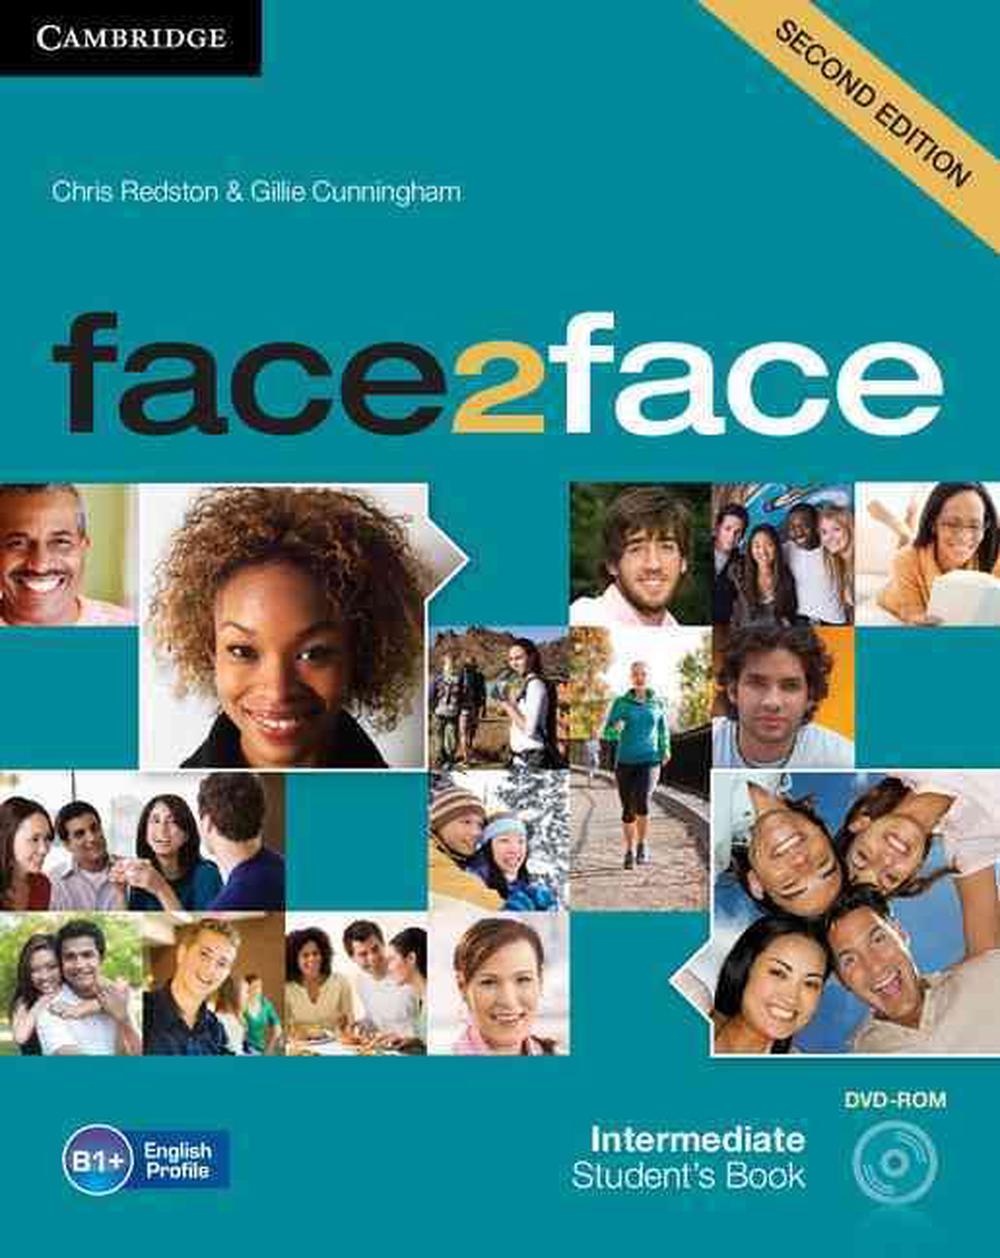 face2face english book beginner student